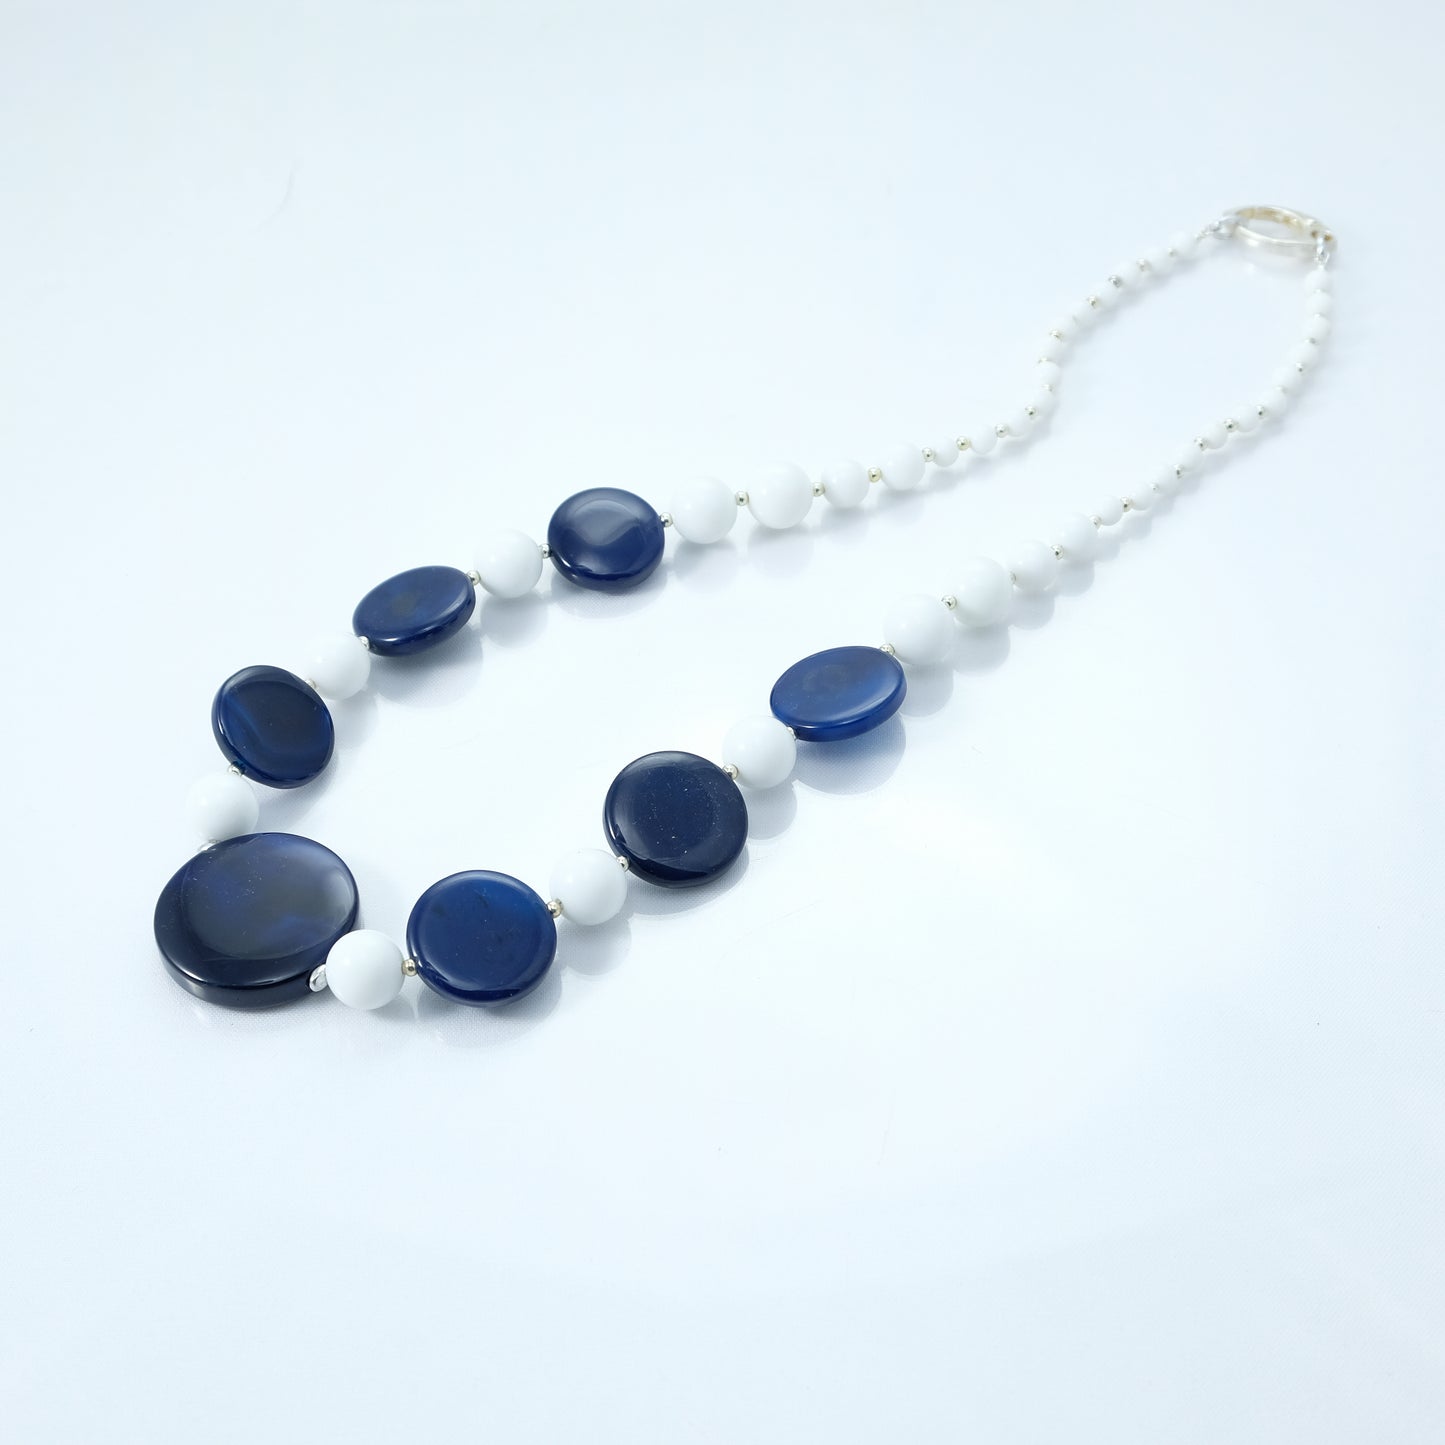 Collana LE PIETRE .055 piccole perle agata bianca e bottoni agata blu.